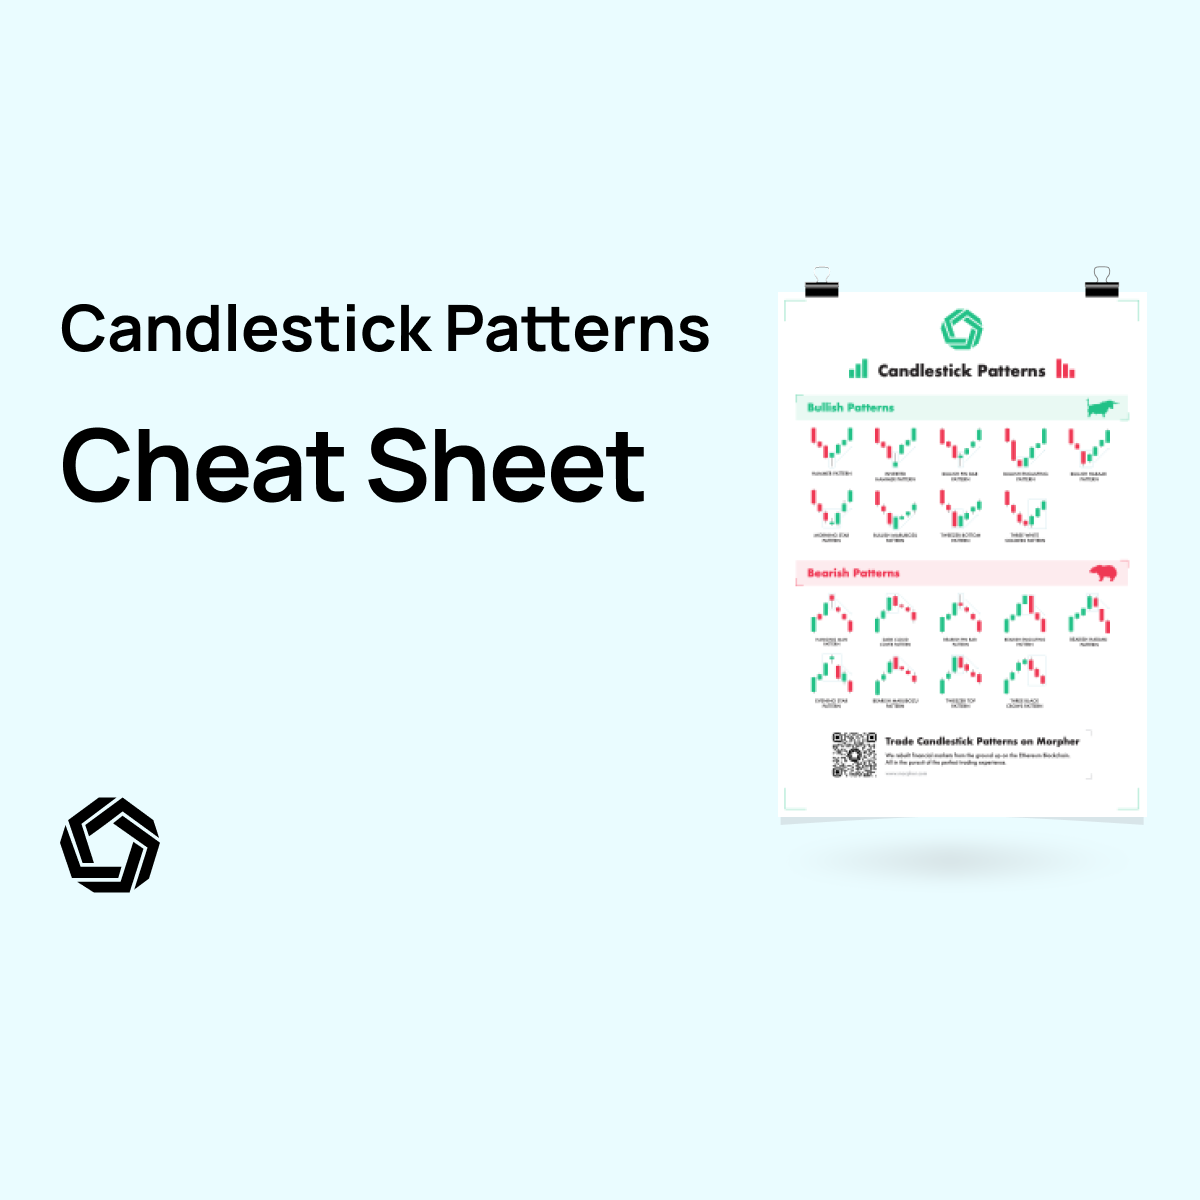 Candlestick Patterns Cheat Sheet